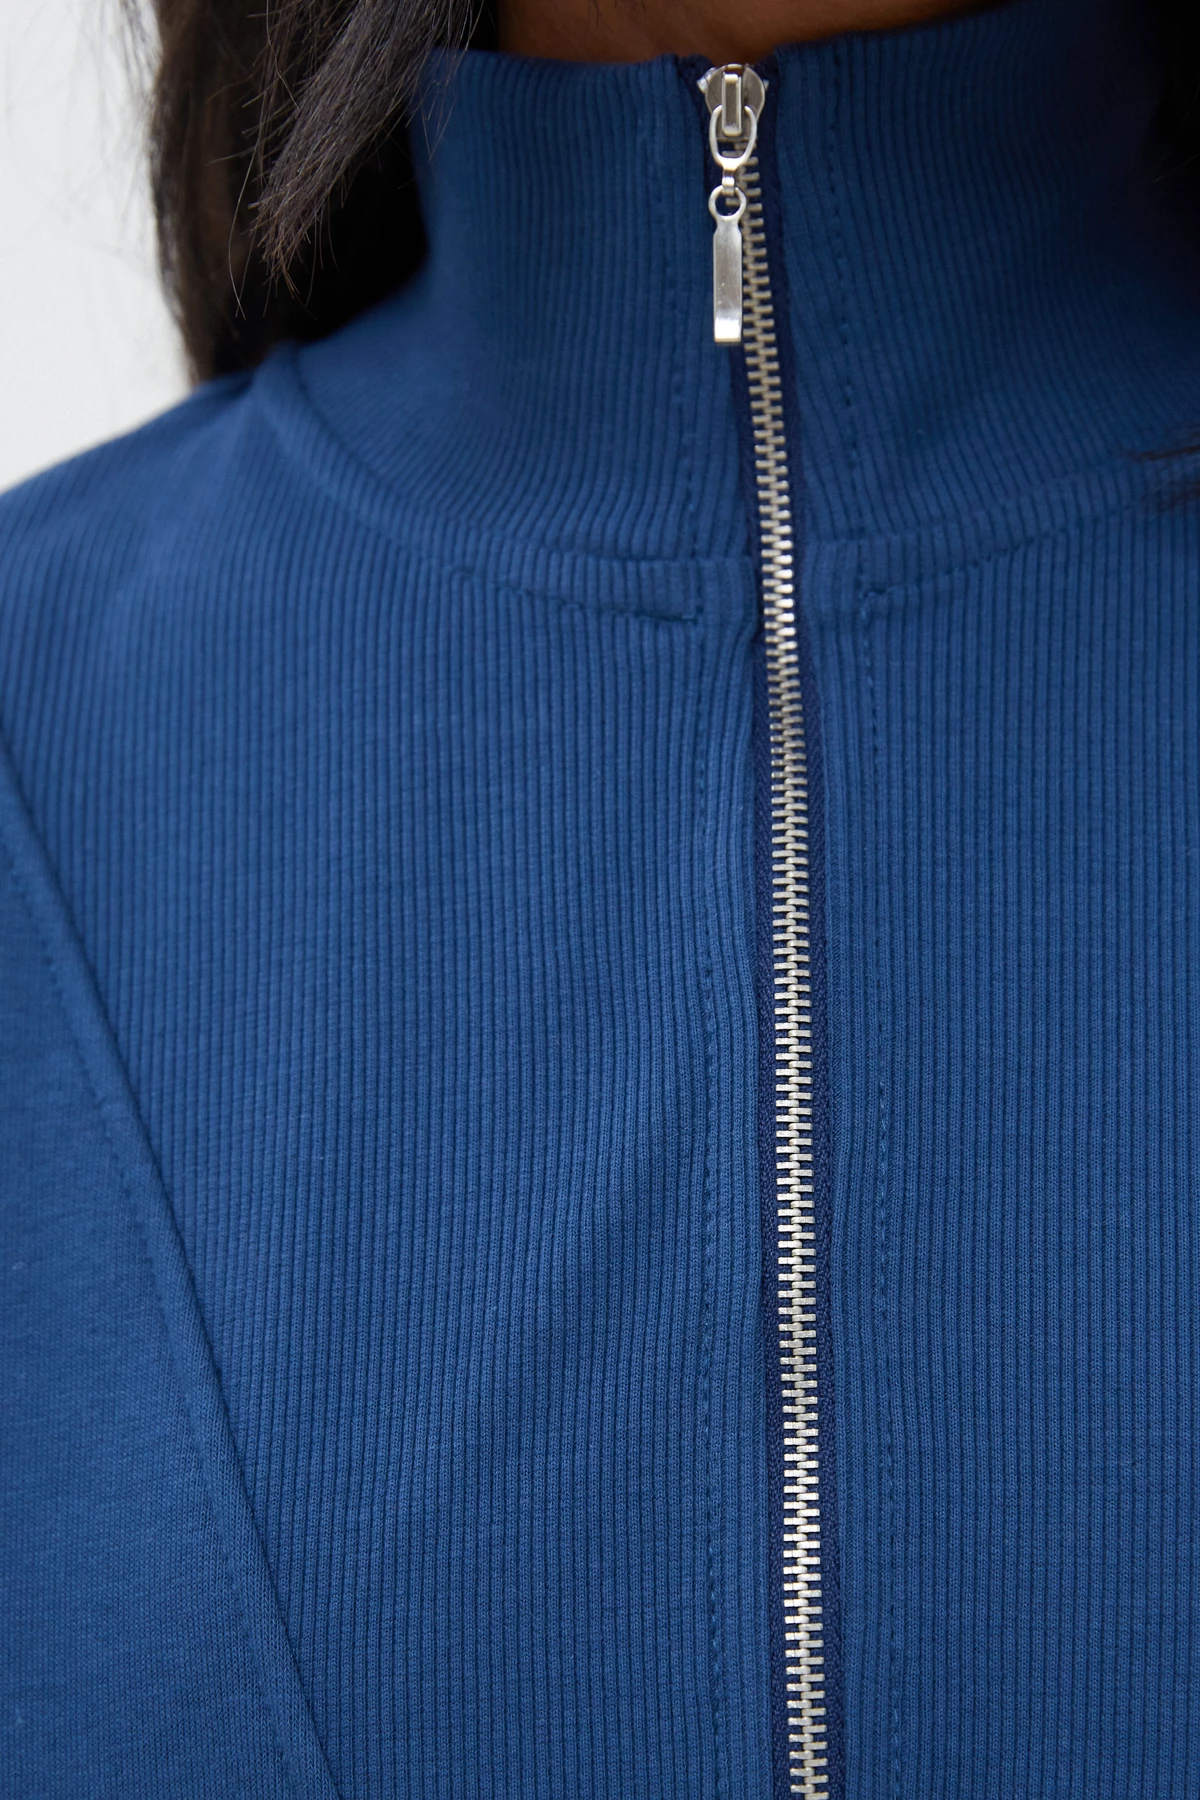 Knnitted navy blue loose sweatshirt on fleece, photo 5